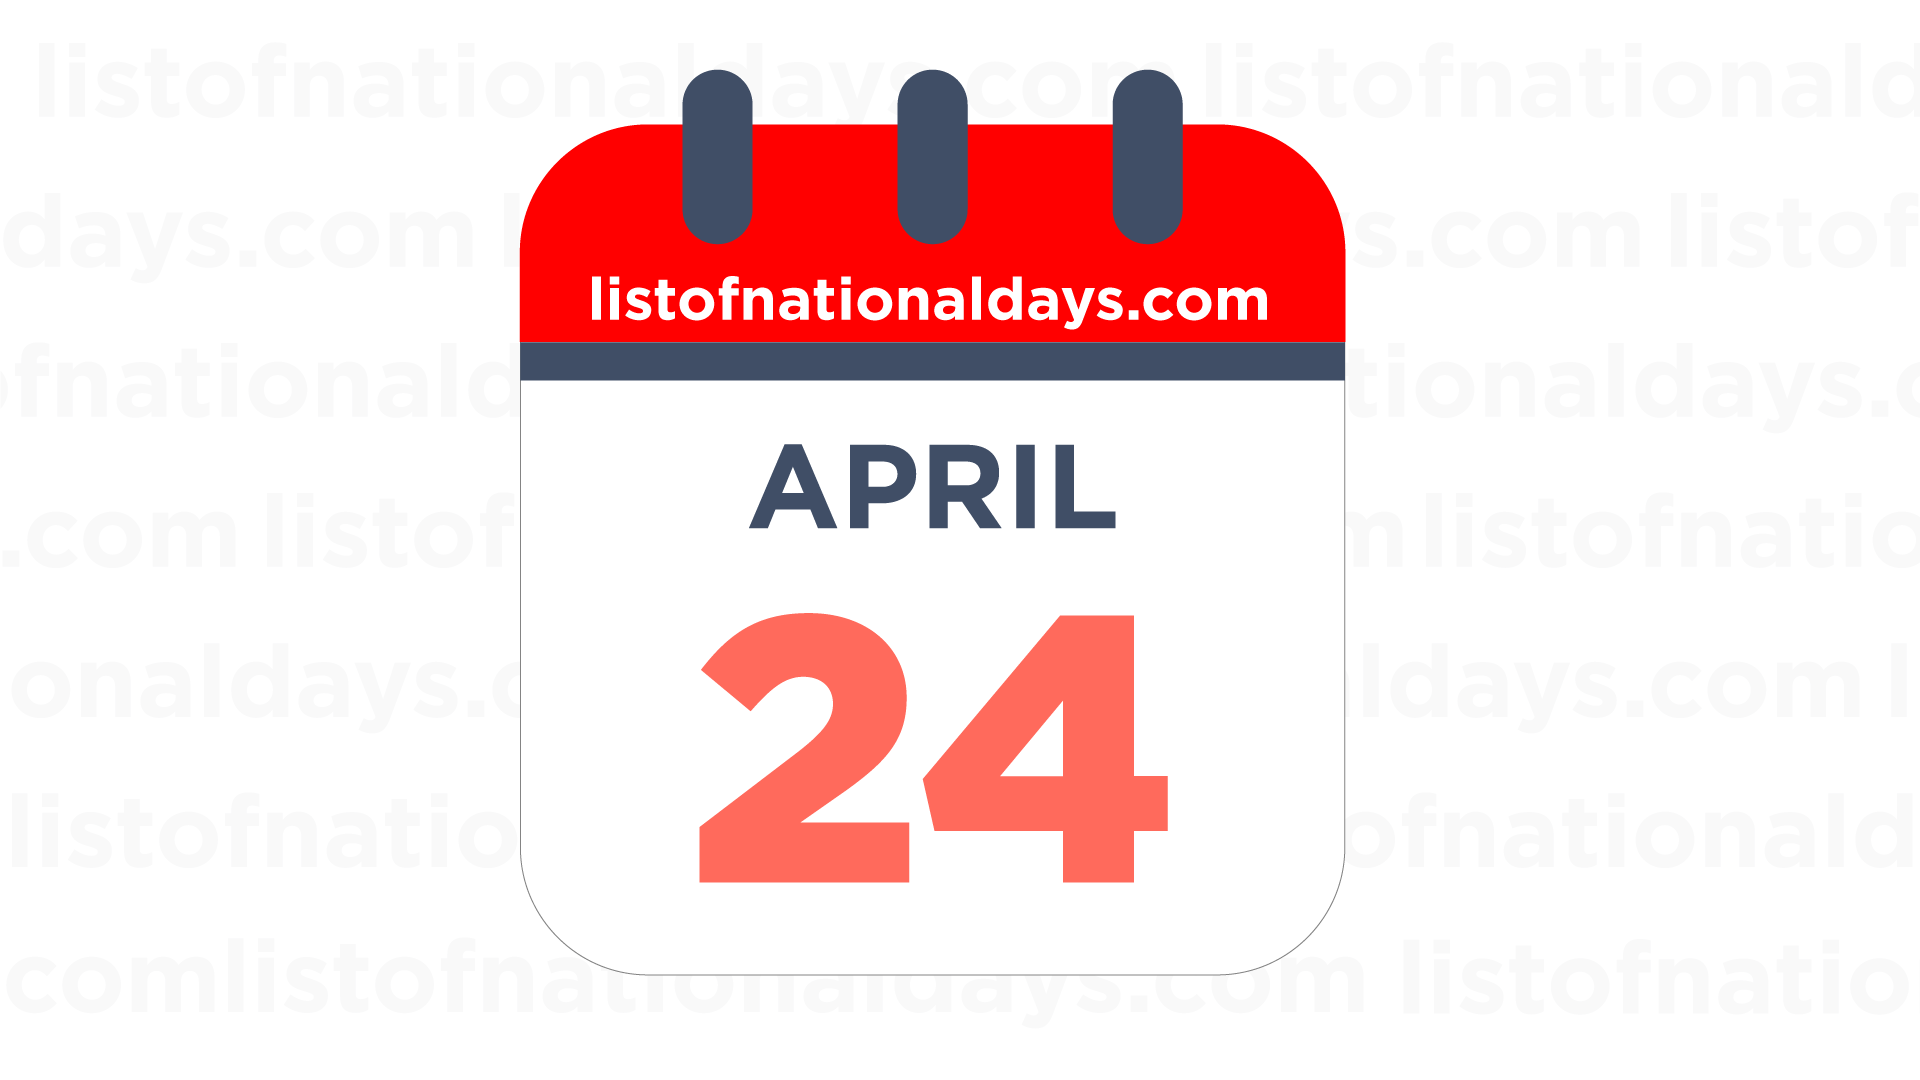 APRIL 24TH: National Holidays, Observances & Famous Birthdays